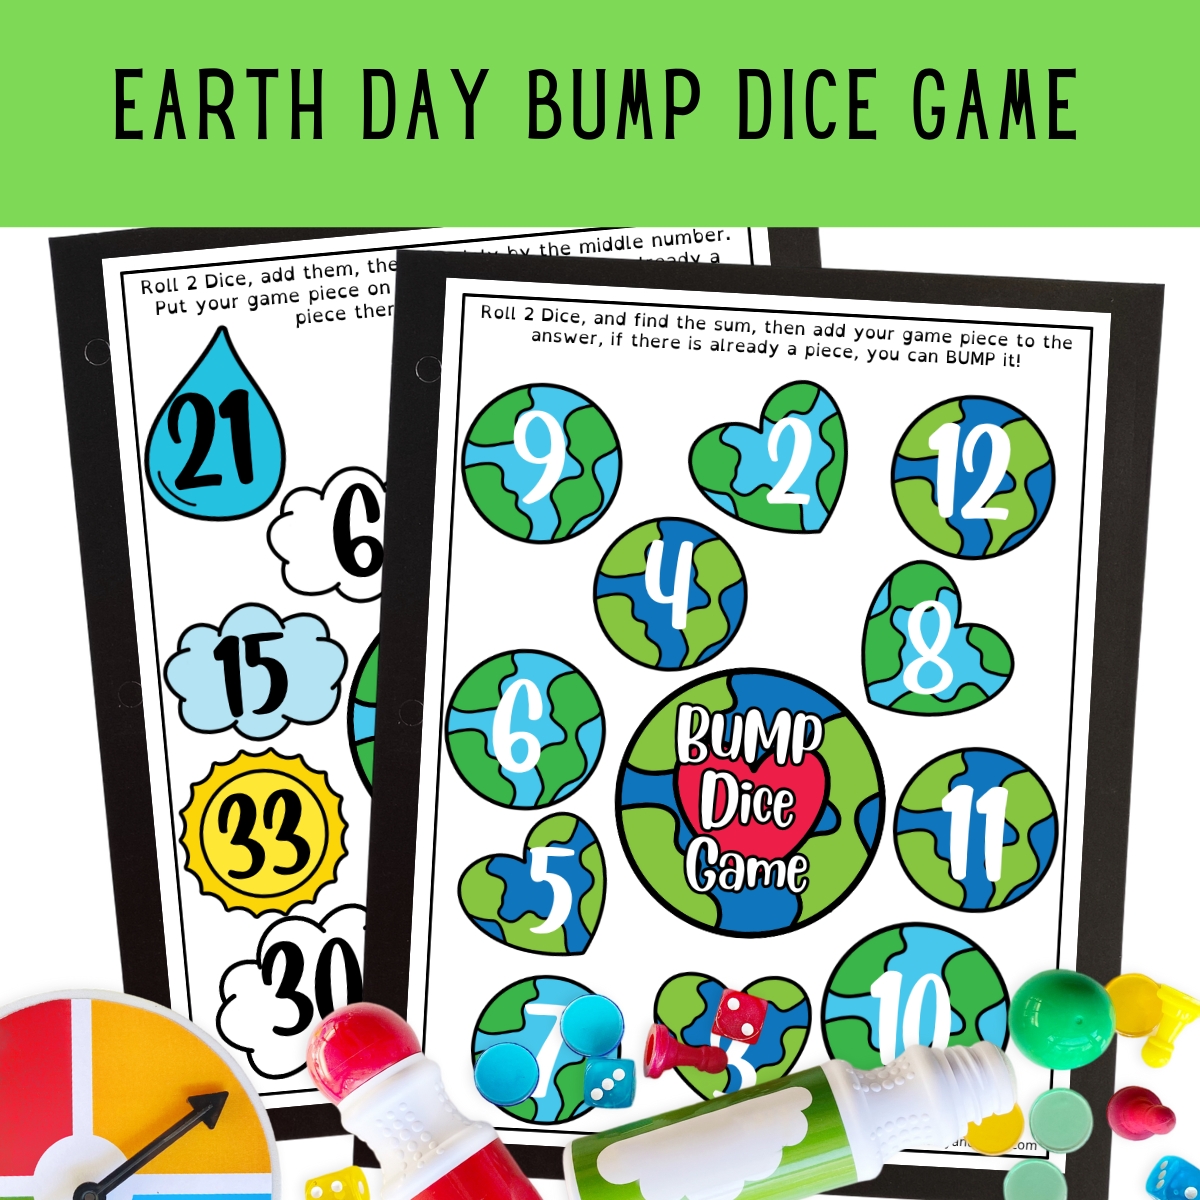 Earth Day Bump Dice Game